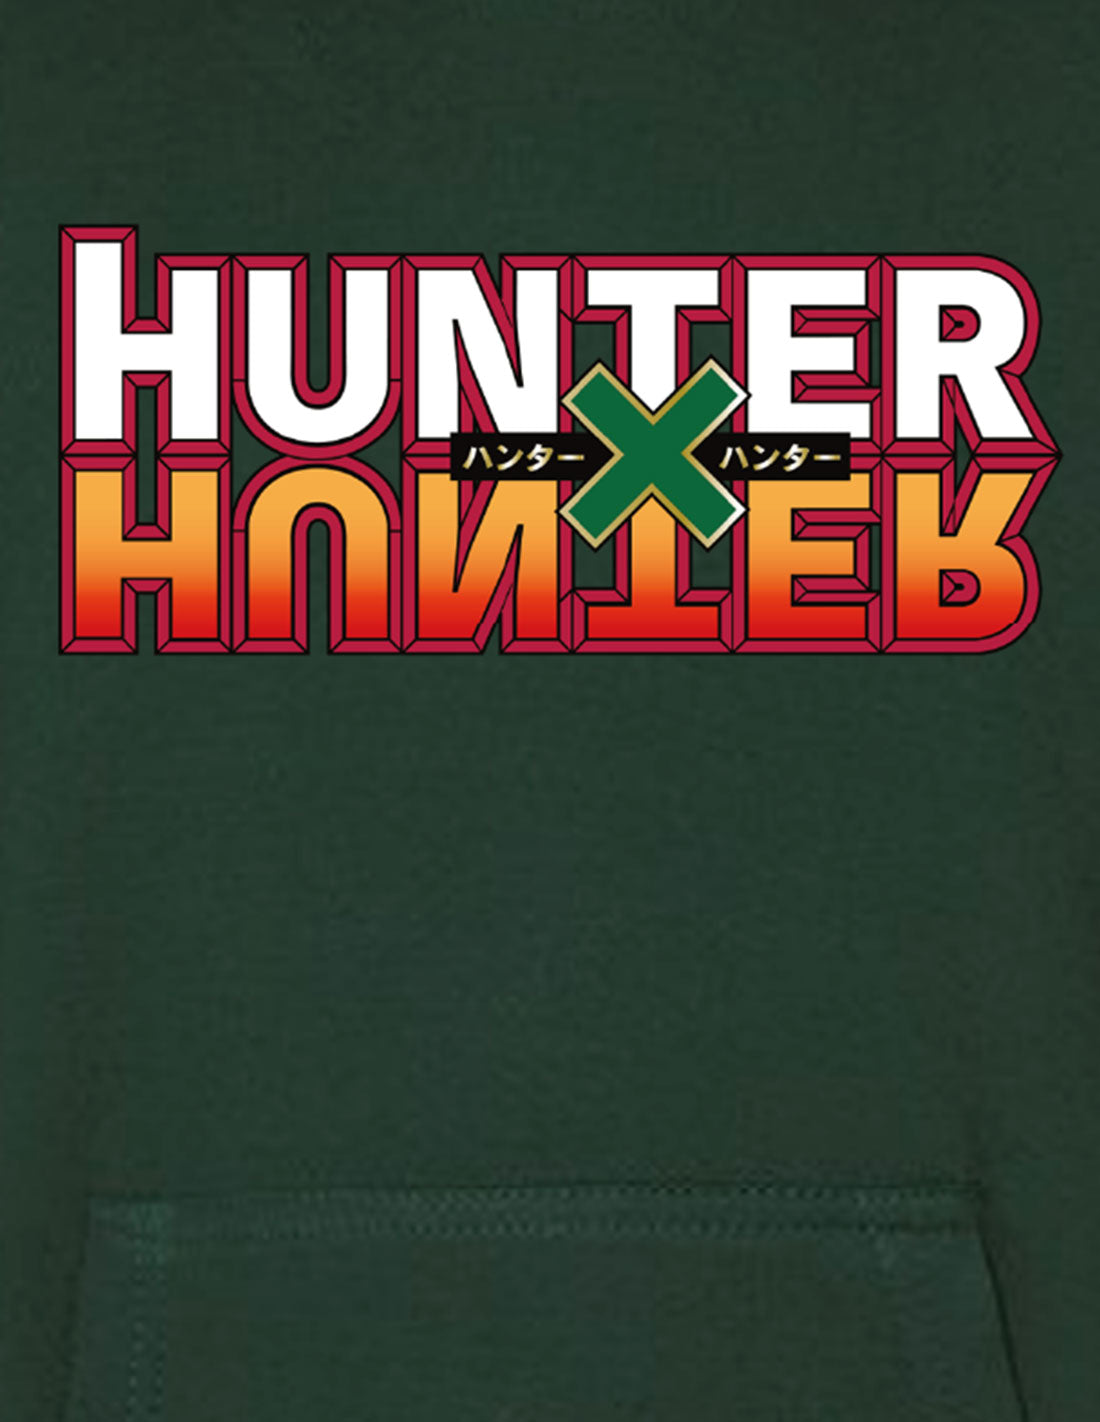 Hunter X Hunter Kids Sweatshirt - Logo